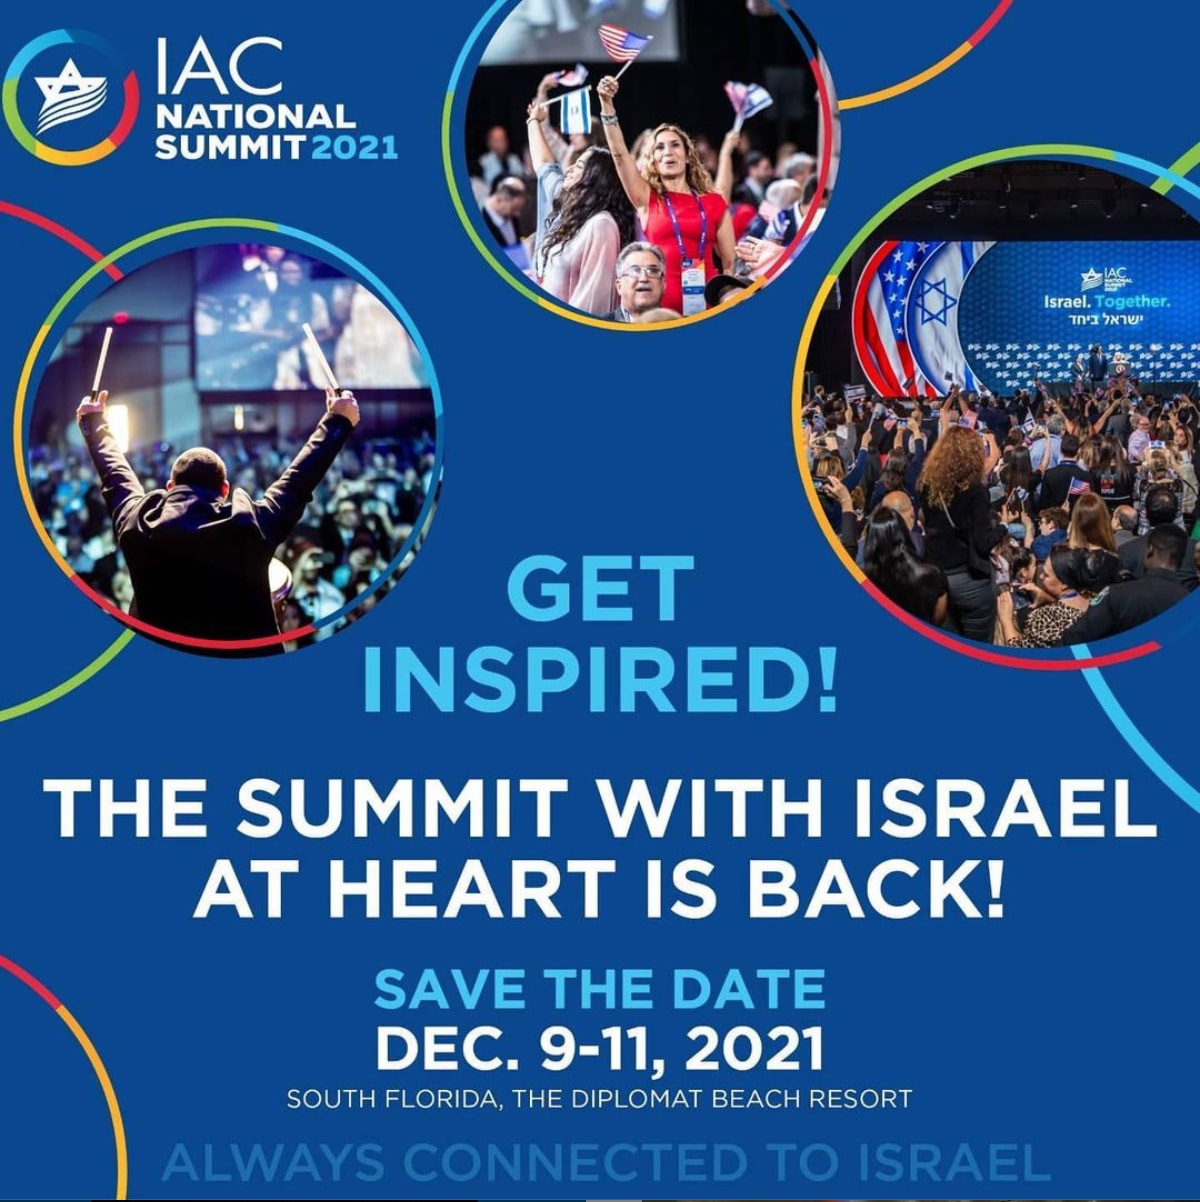 IAC National Summit